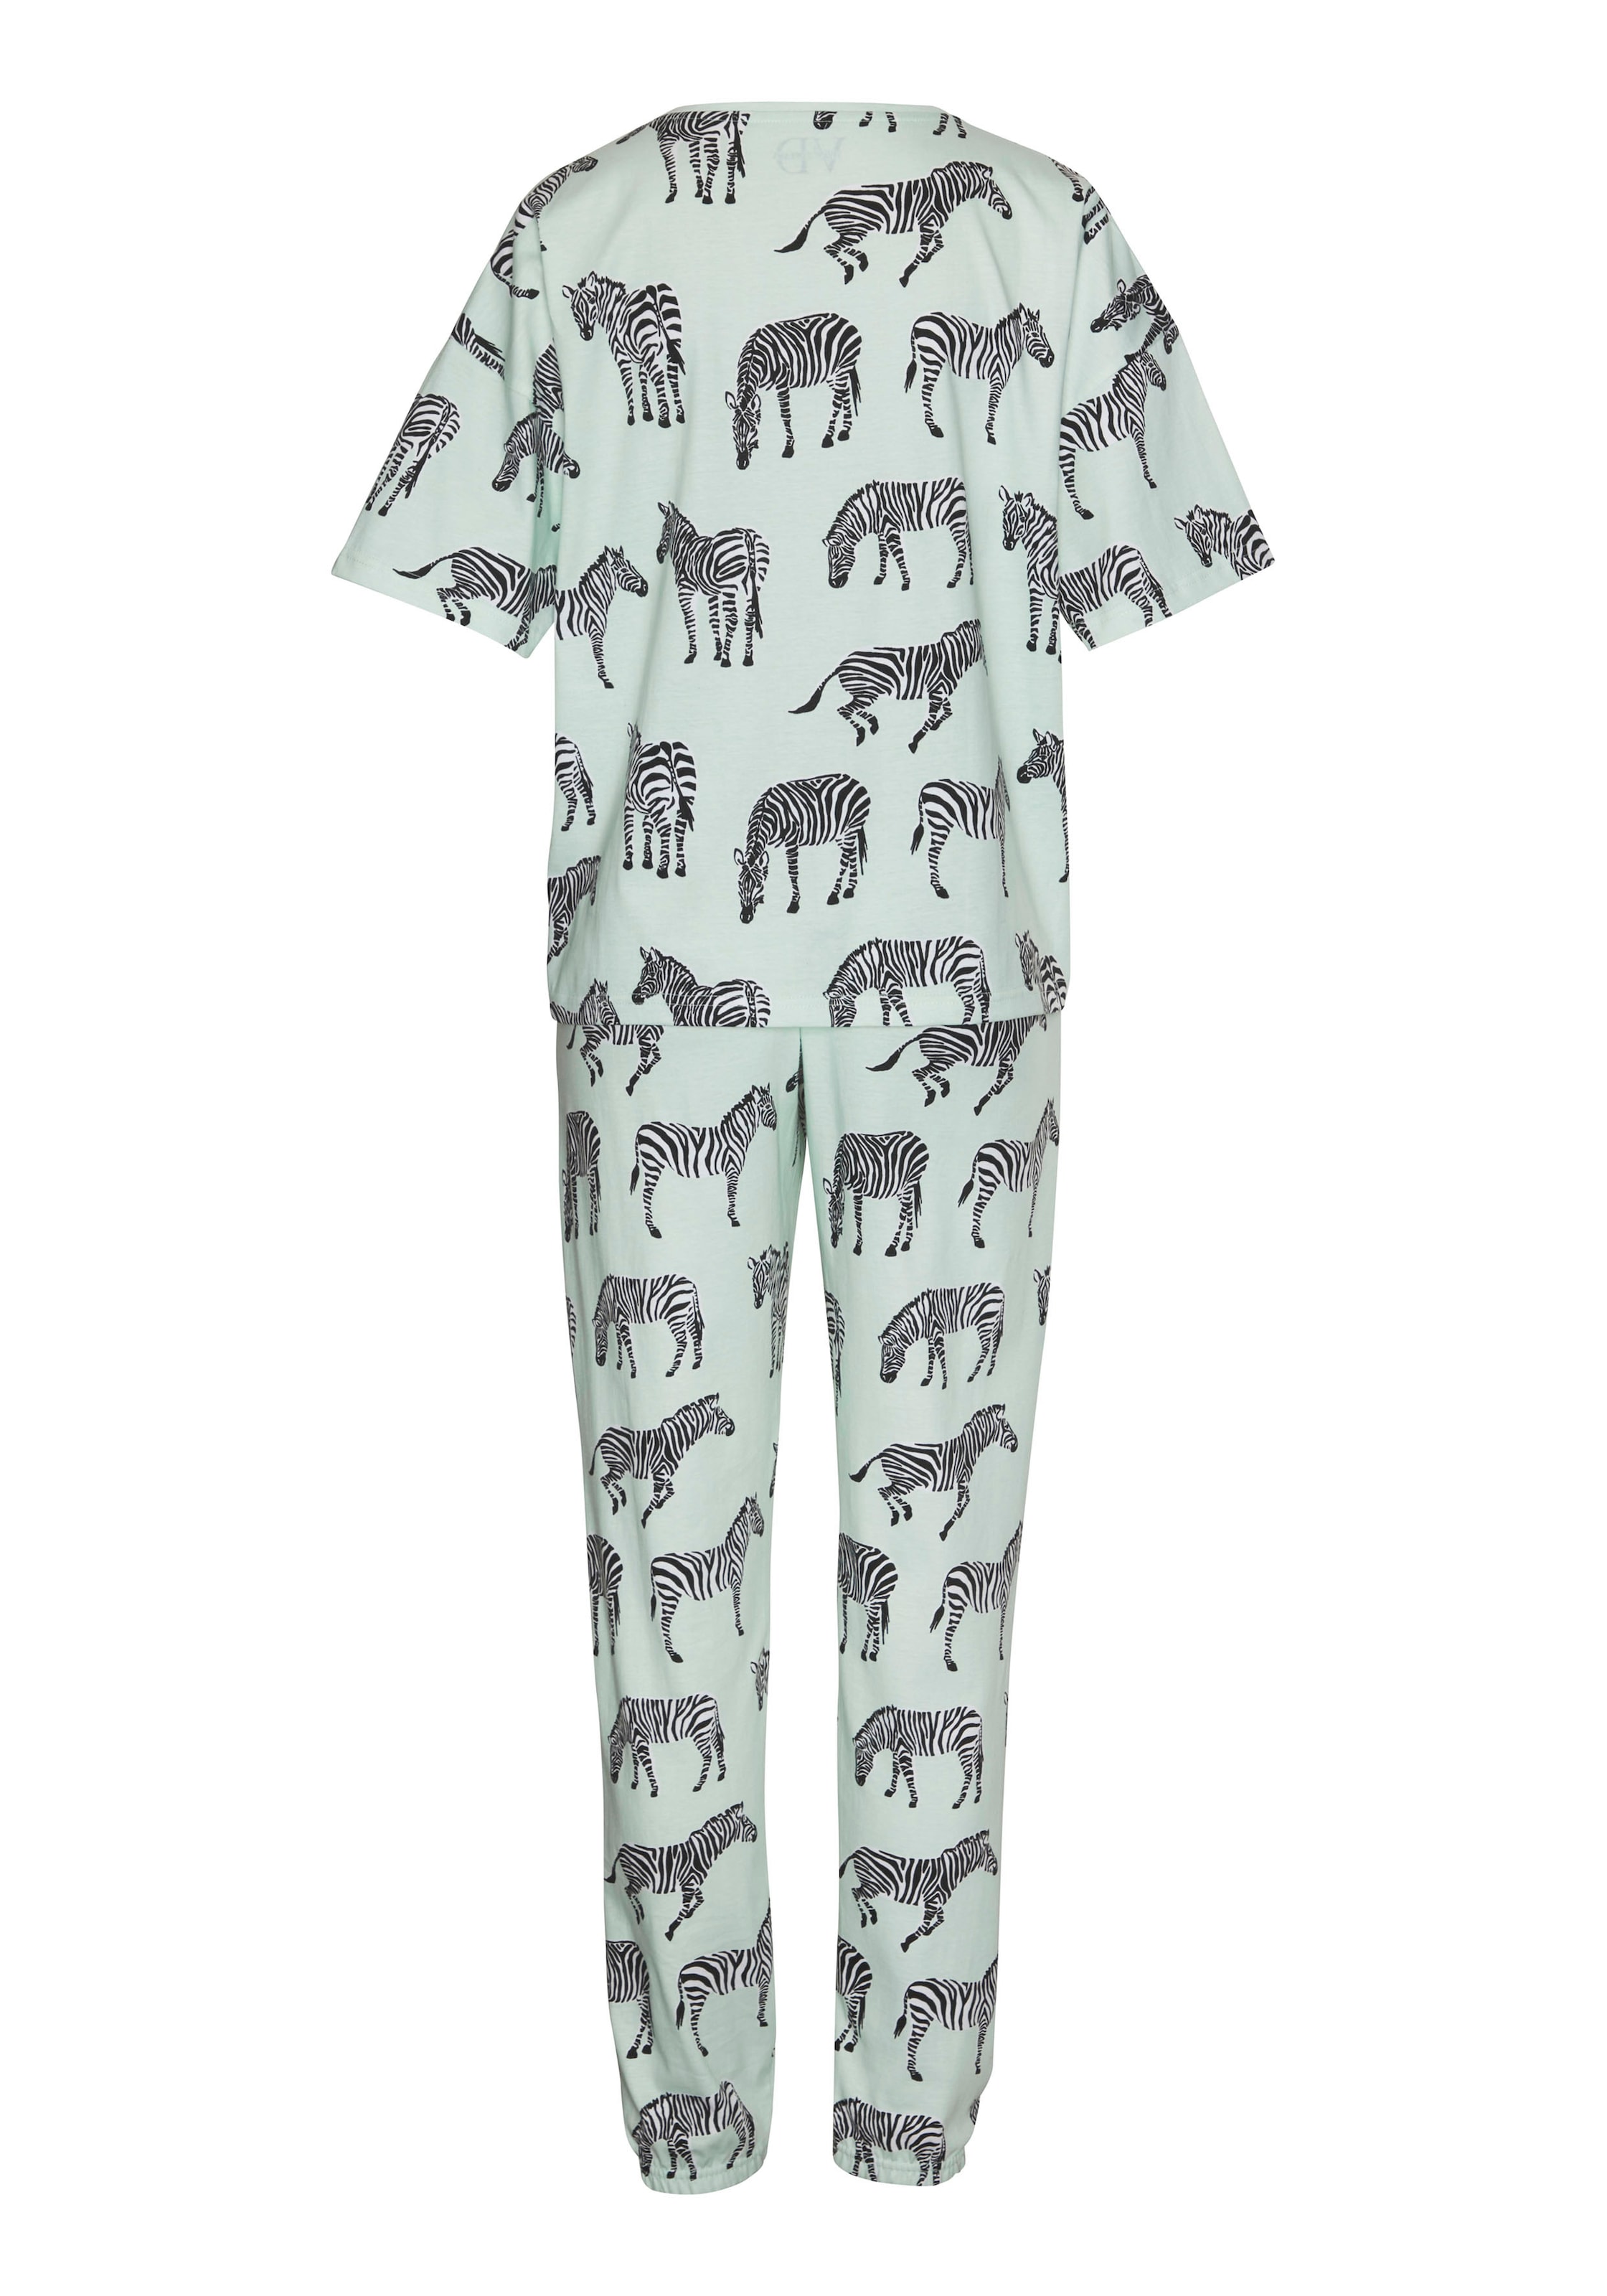 online (2 mt tlg.), Vivance Animal Dreams Pyjama, Alloverprint kaufen